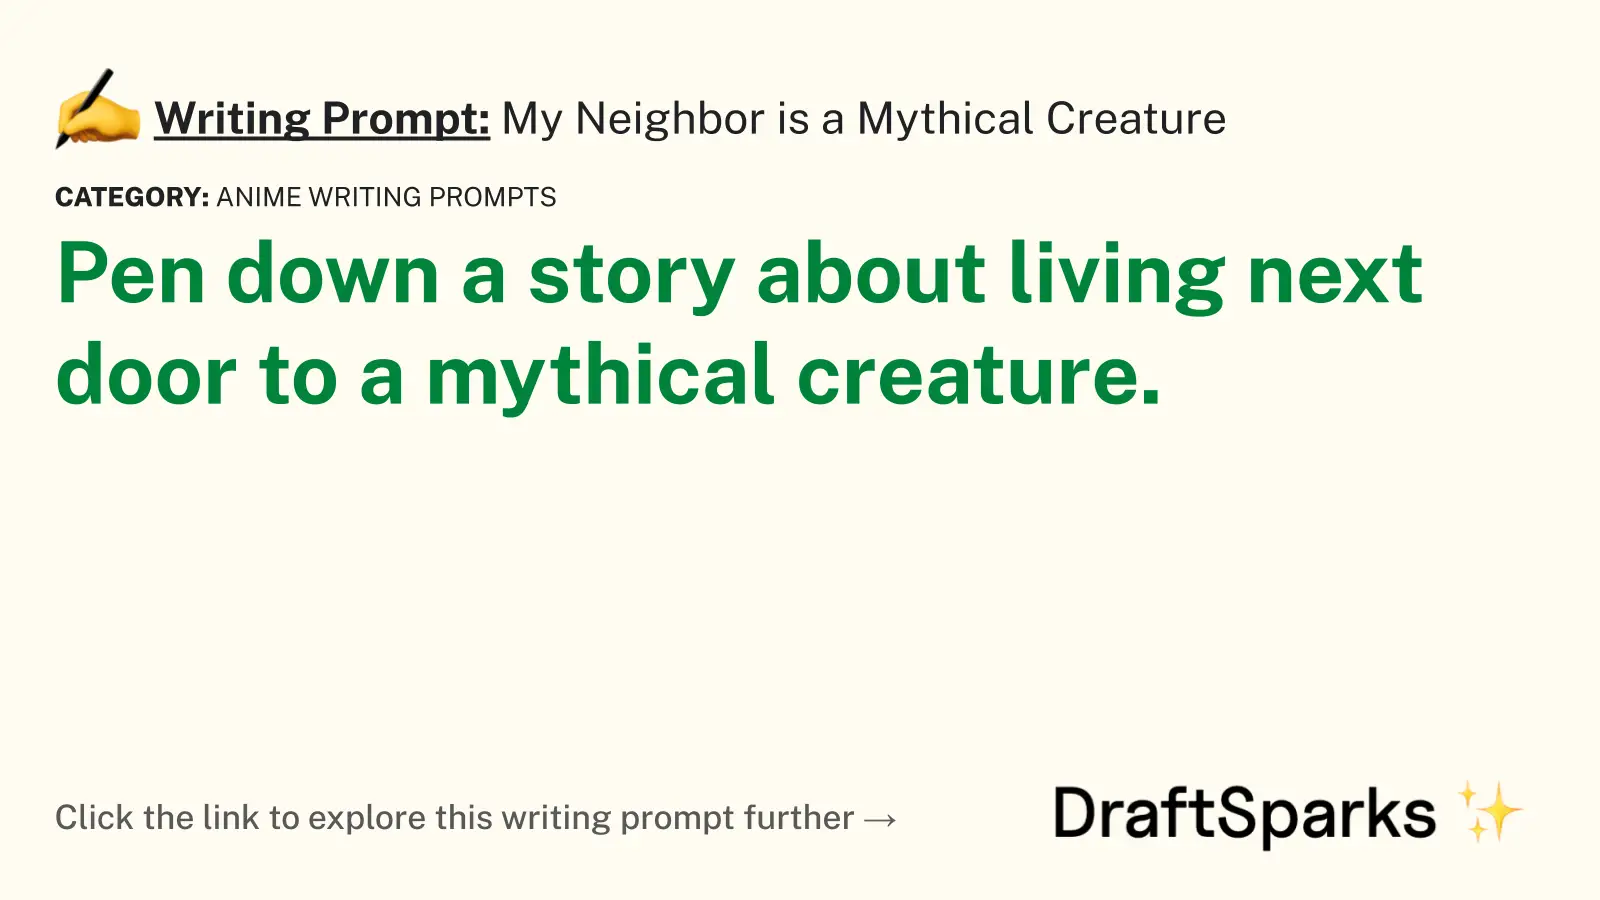 My Neighbor is a Mythical Creature